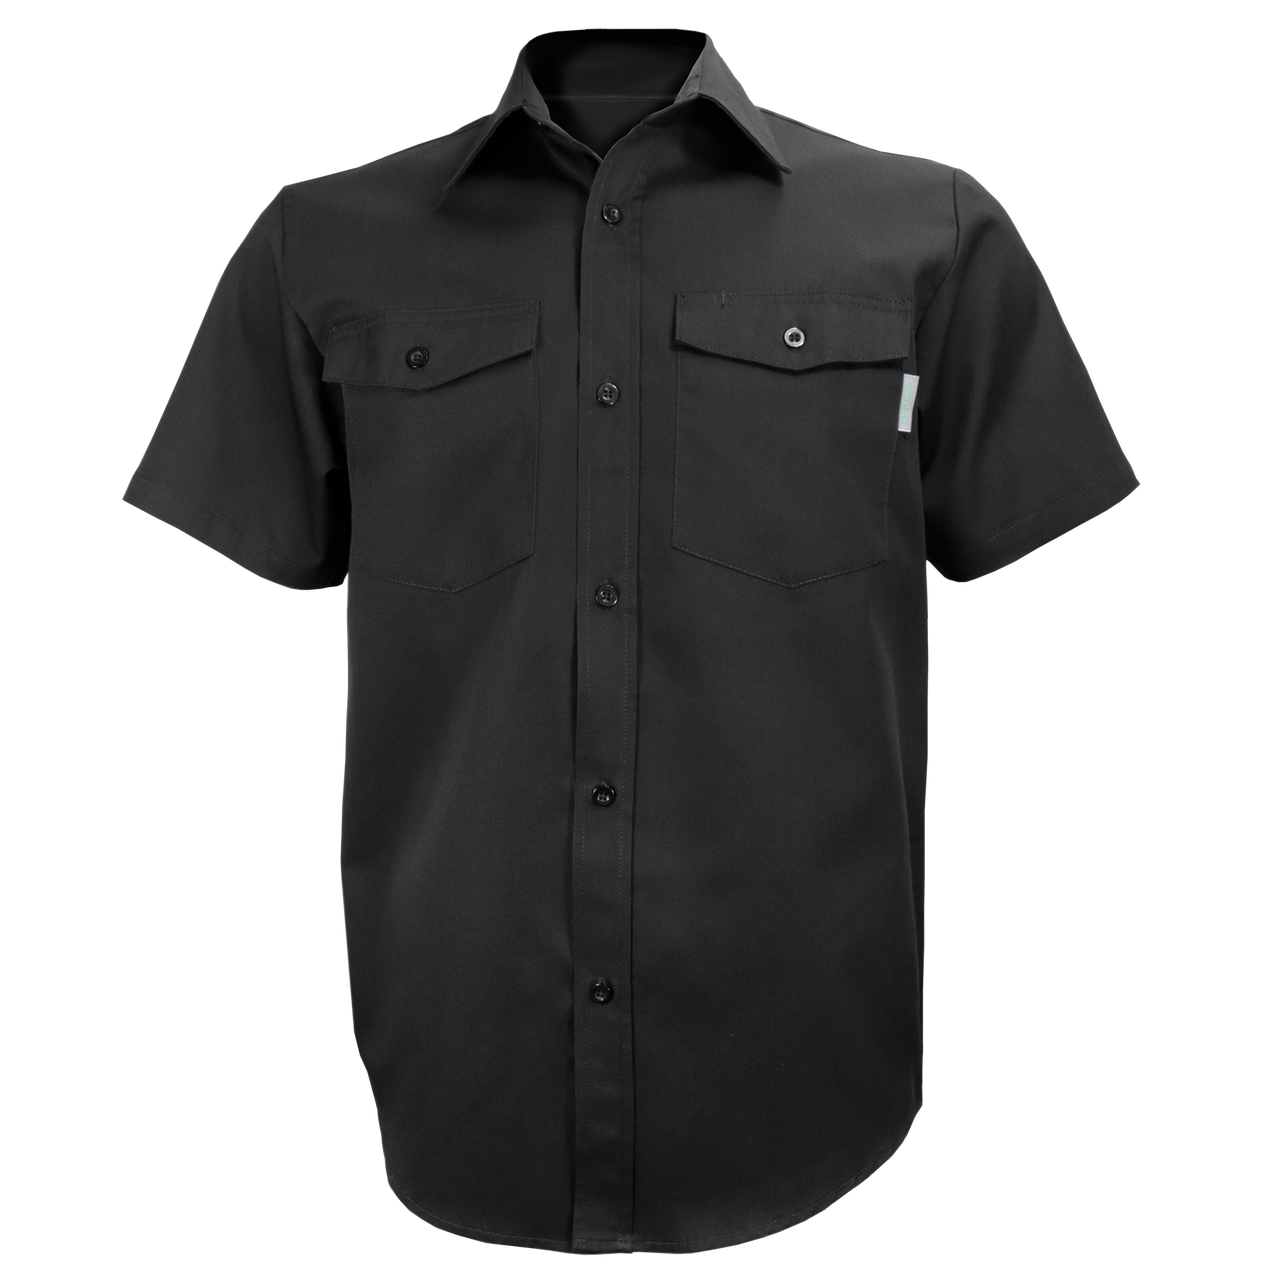 650 - Chemise à manches courtes||650 - Short sleeves shirt